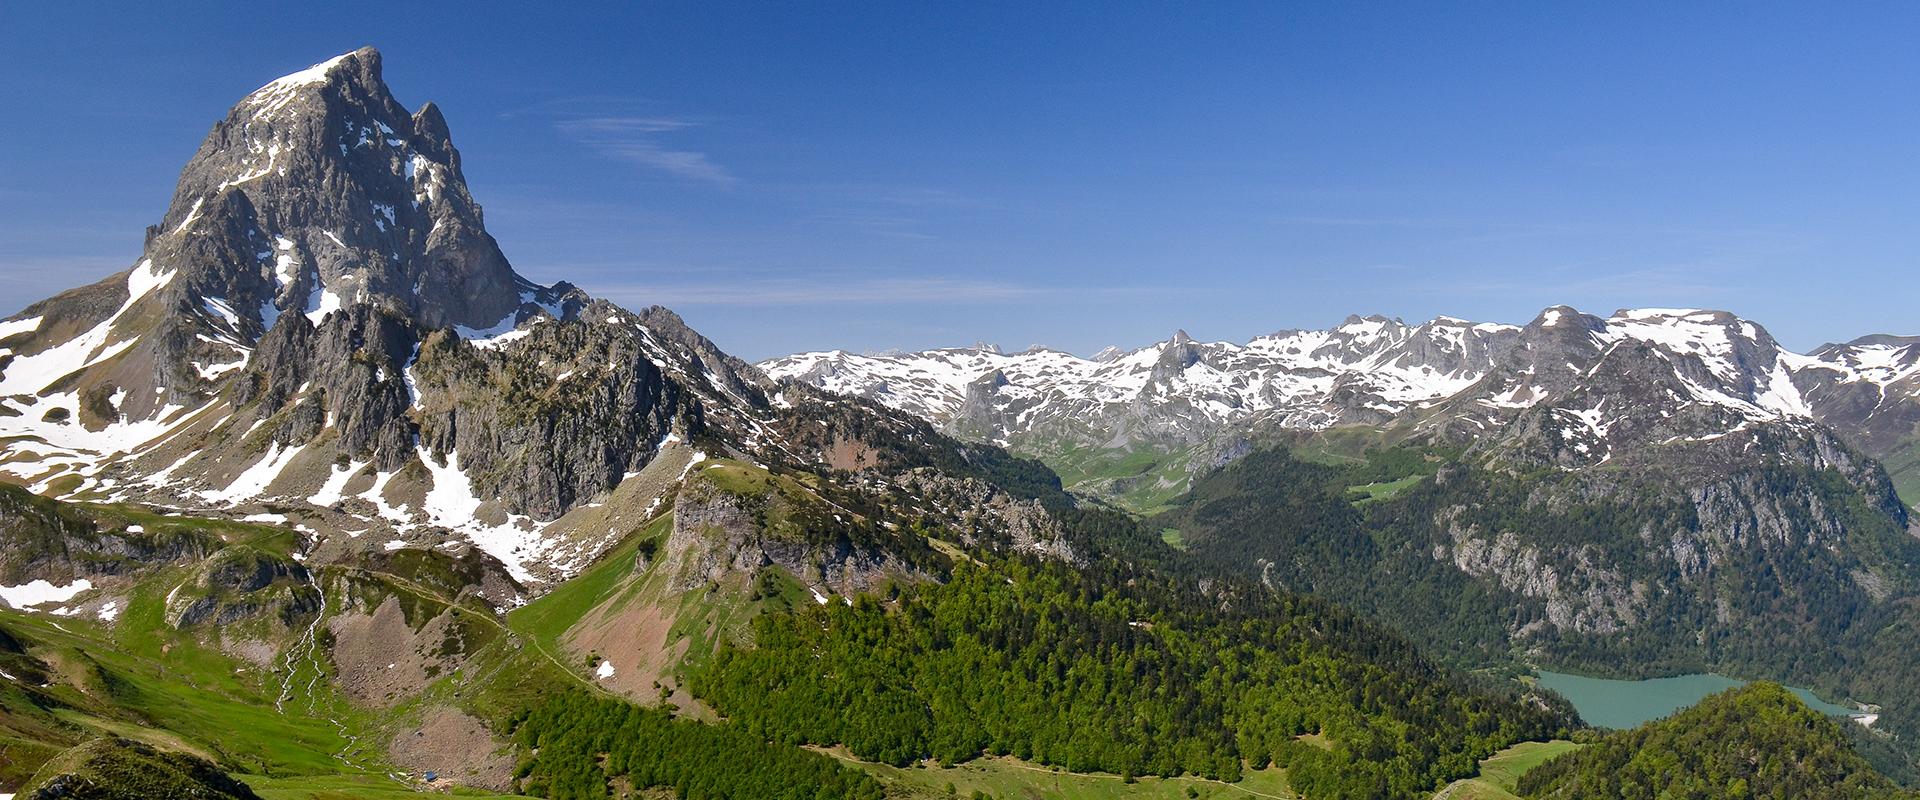 Pic du Midi d'Ossau, Pyrénées